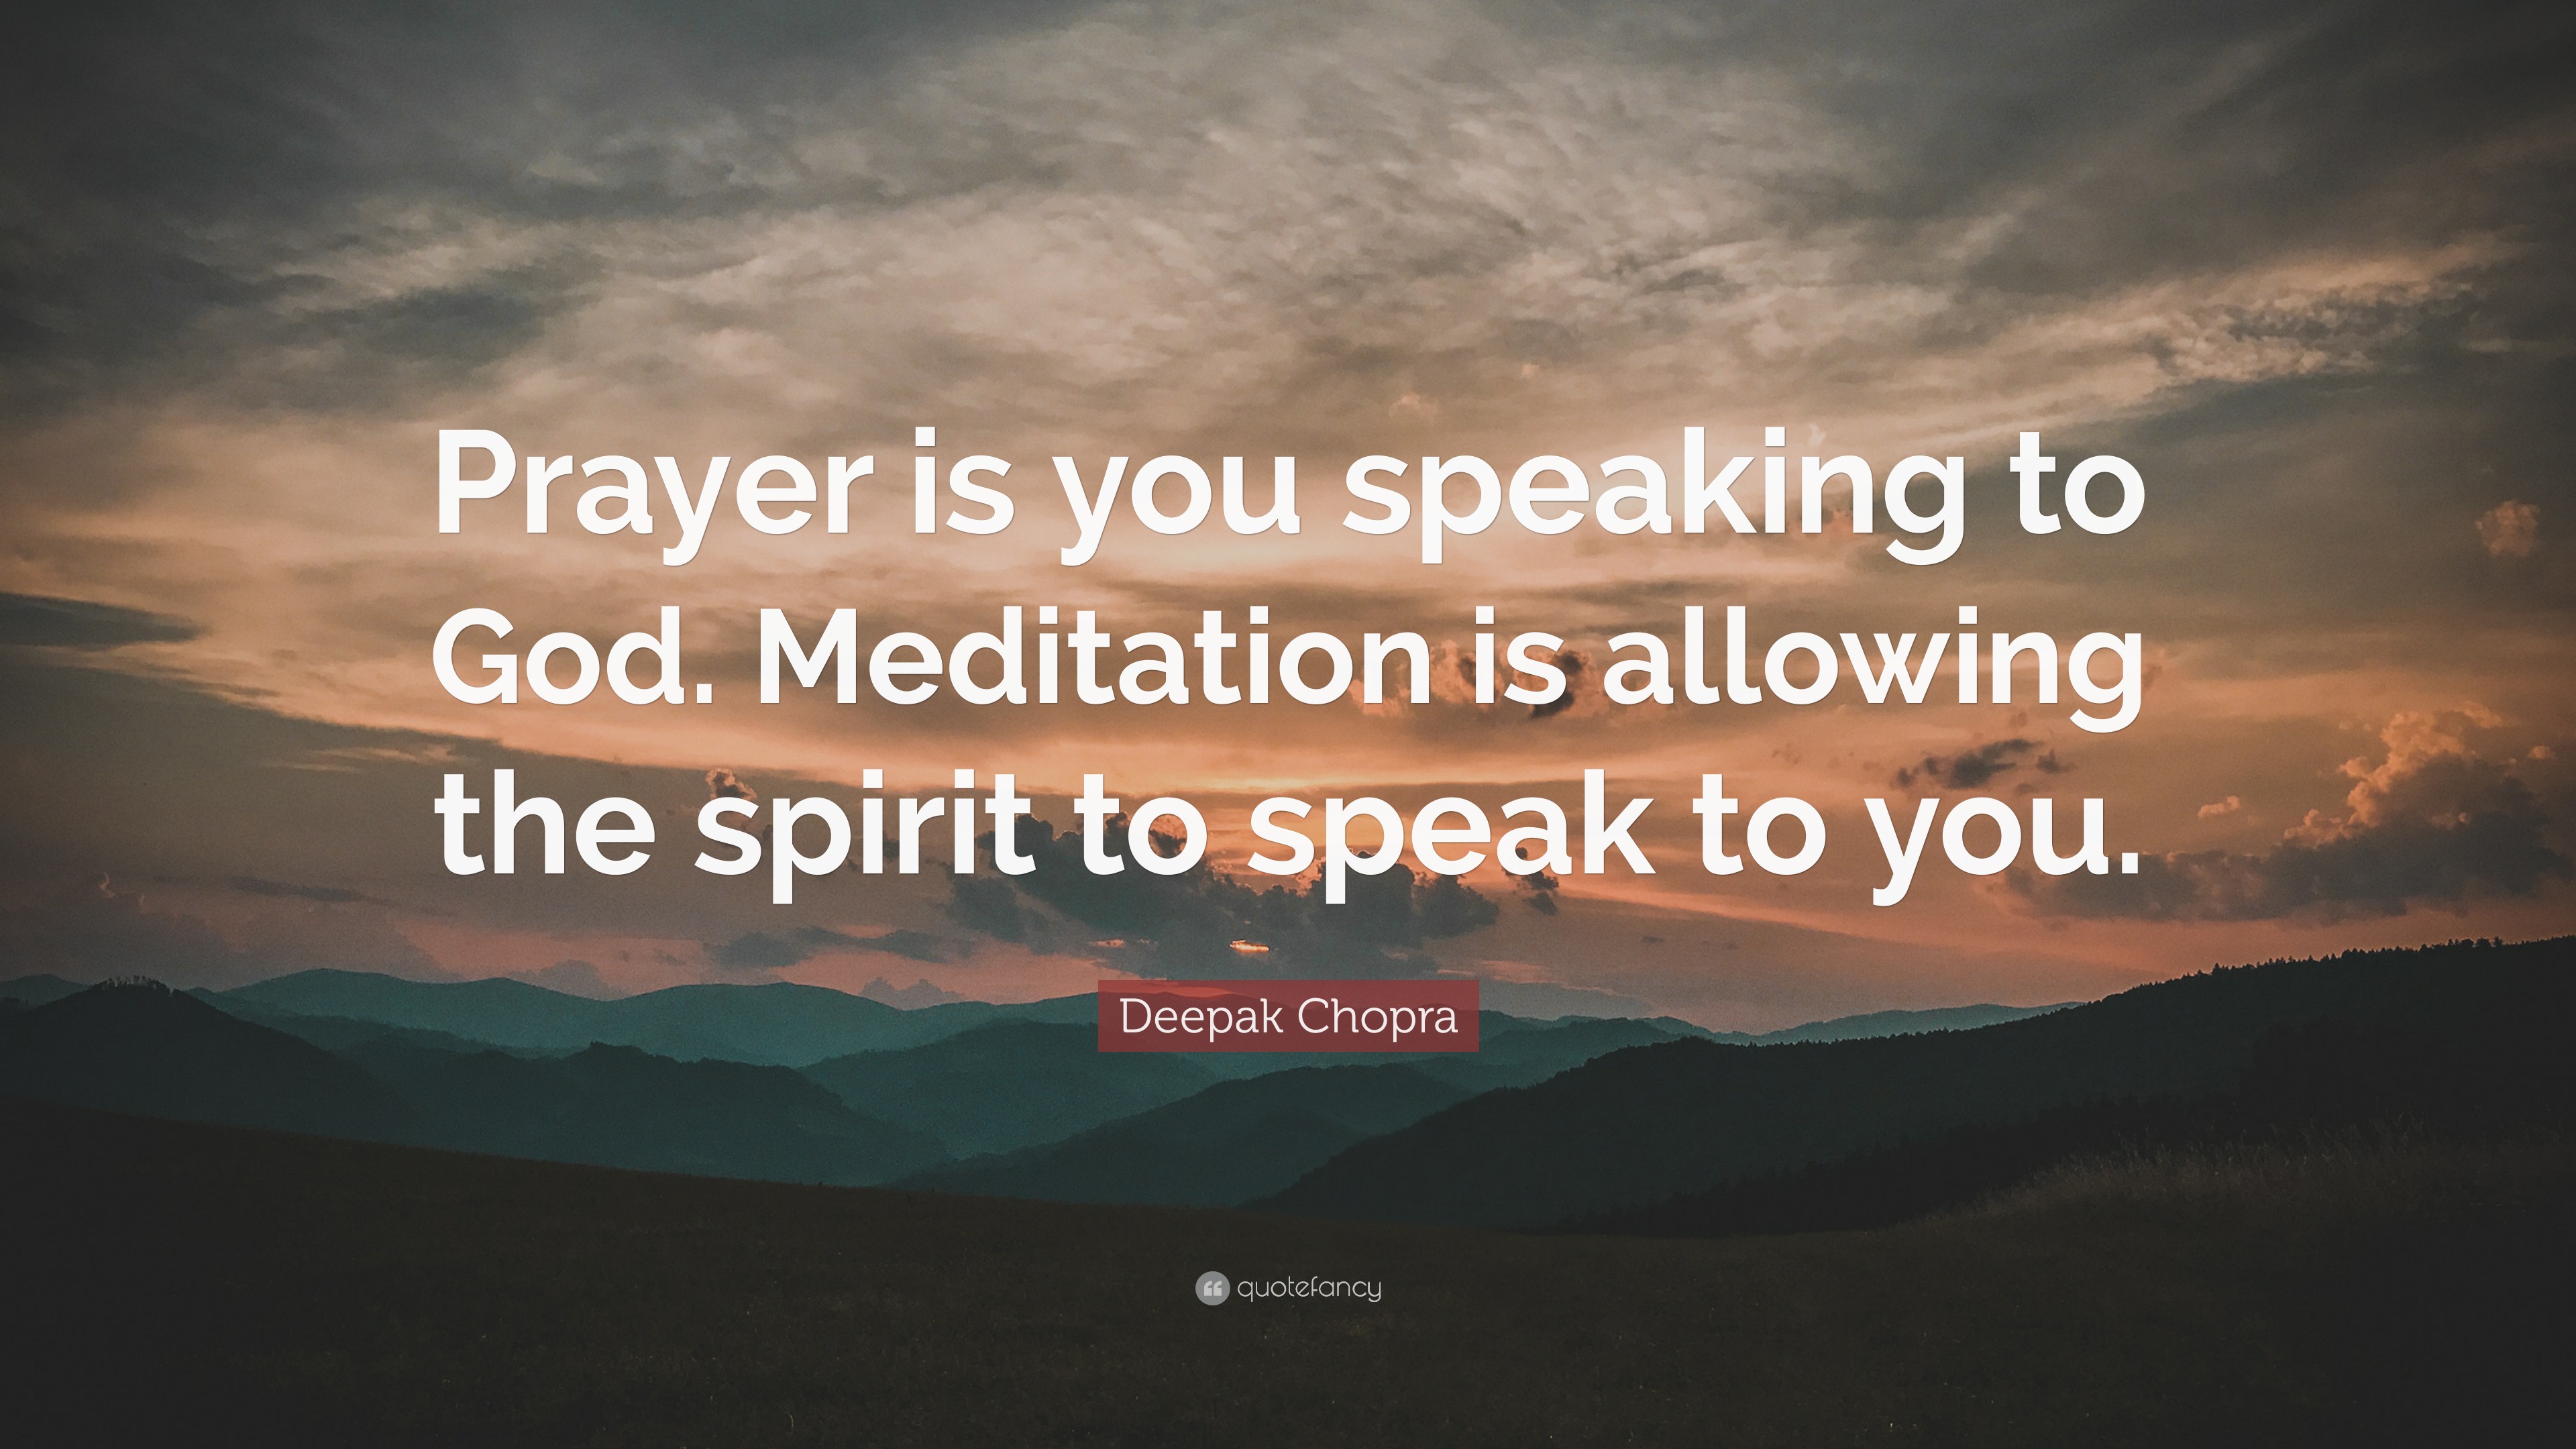 Deepak Chopra Quote “Prayer is you speaking to God. Meditation is